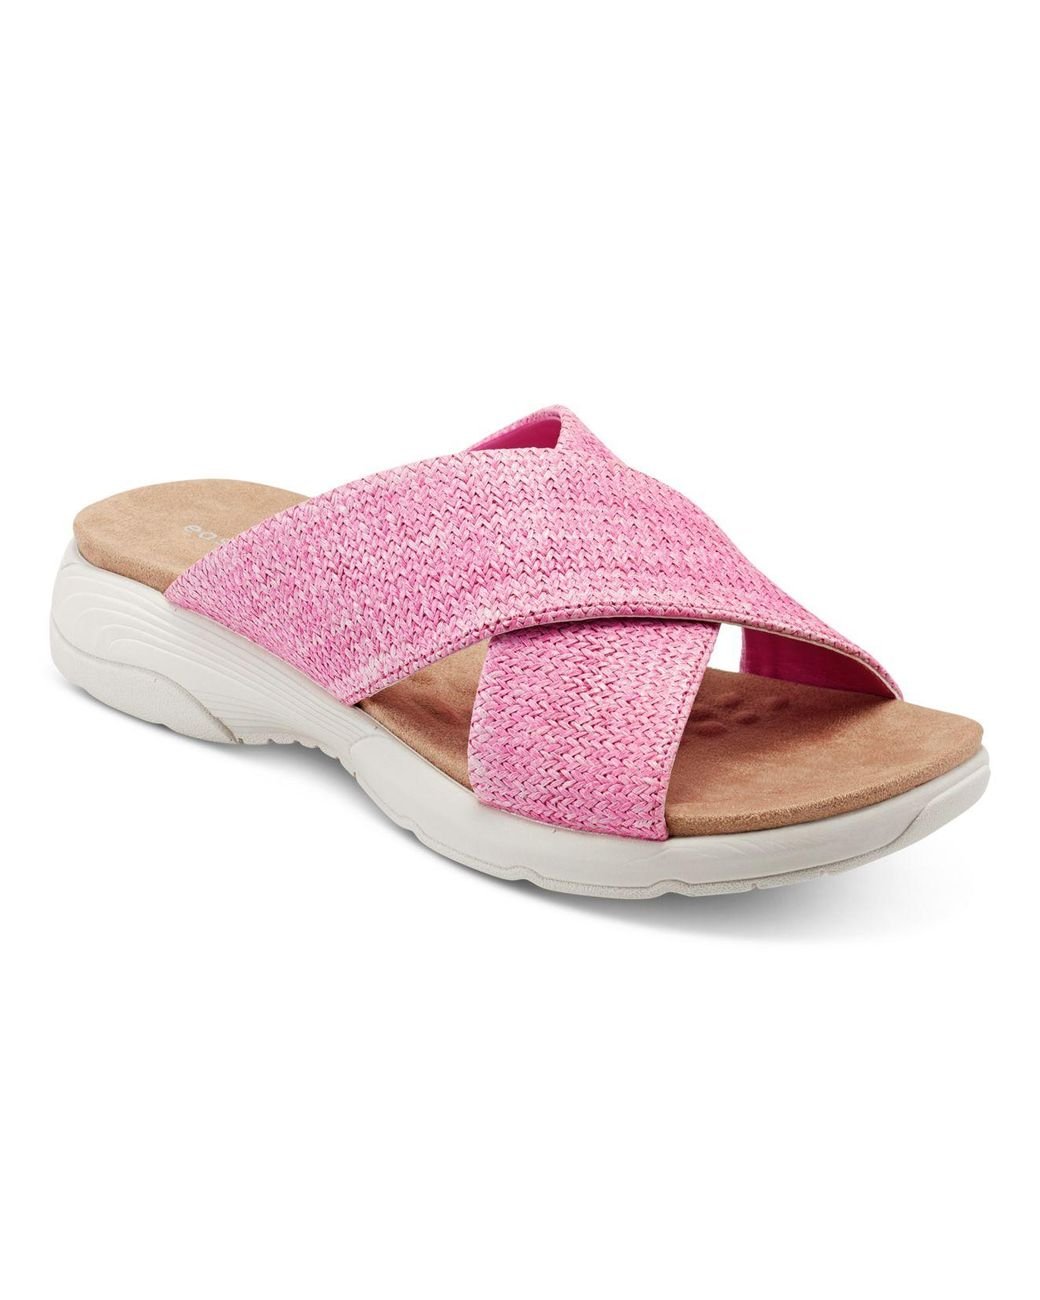 Easy Spirit Taite Double Strap Slide Sandals in Pink - Lyst